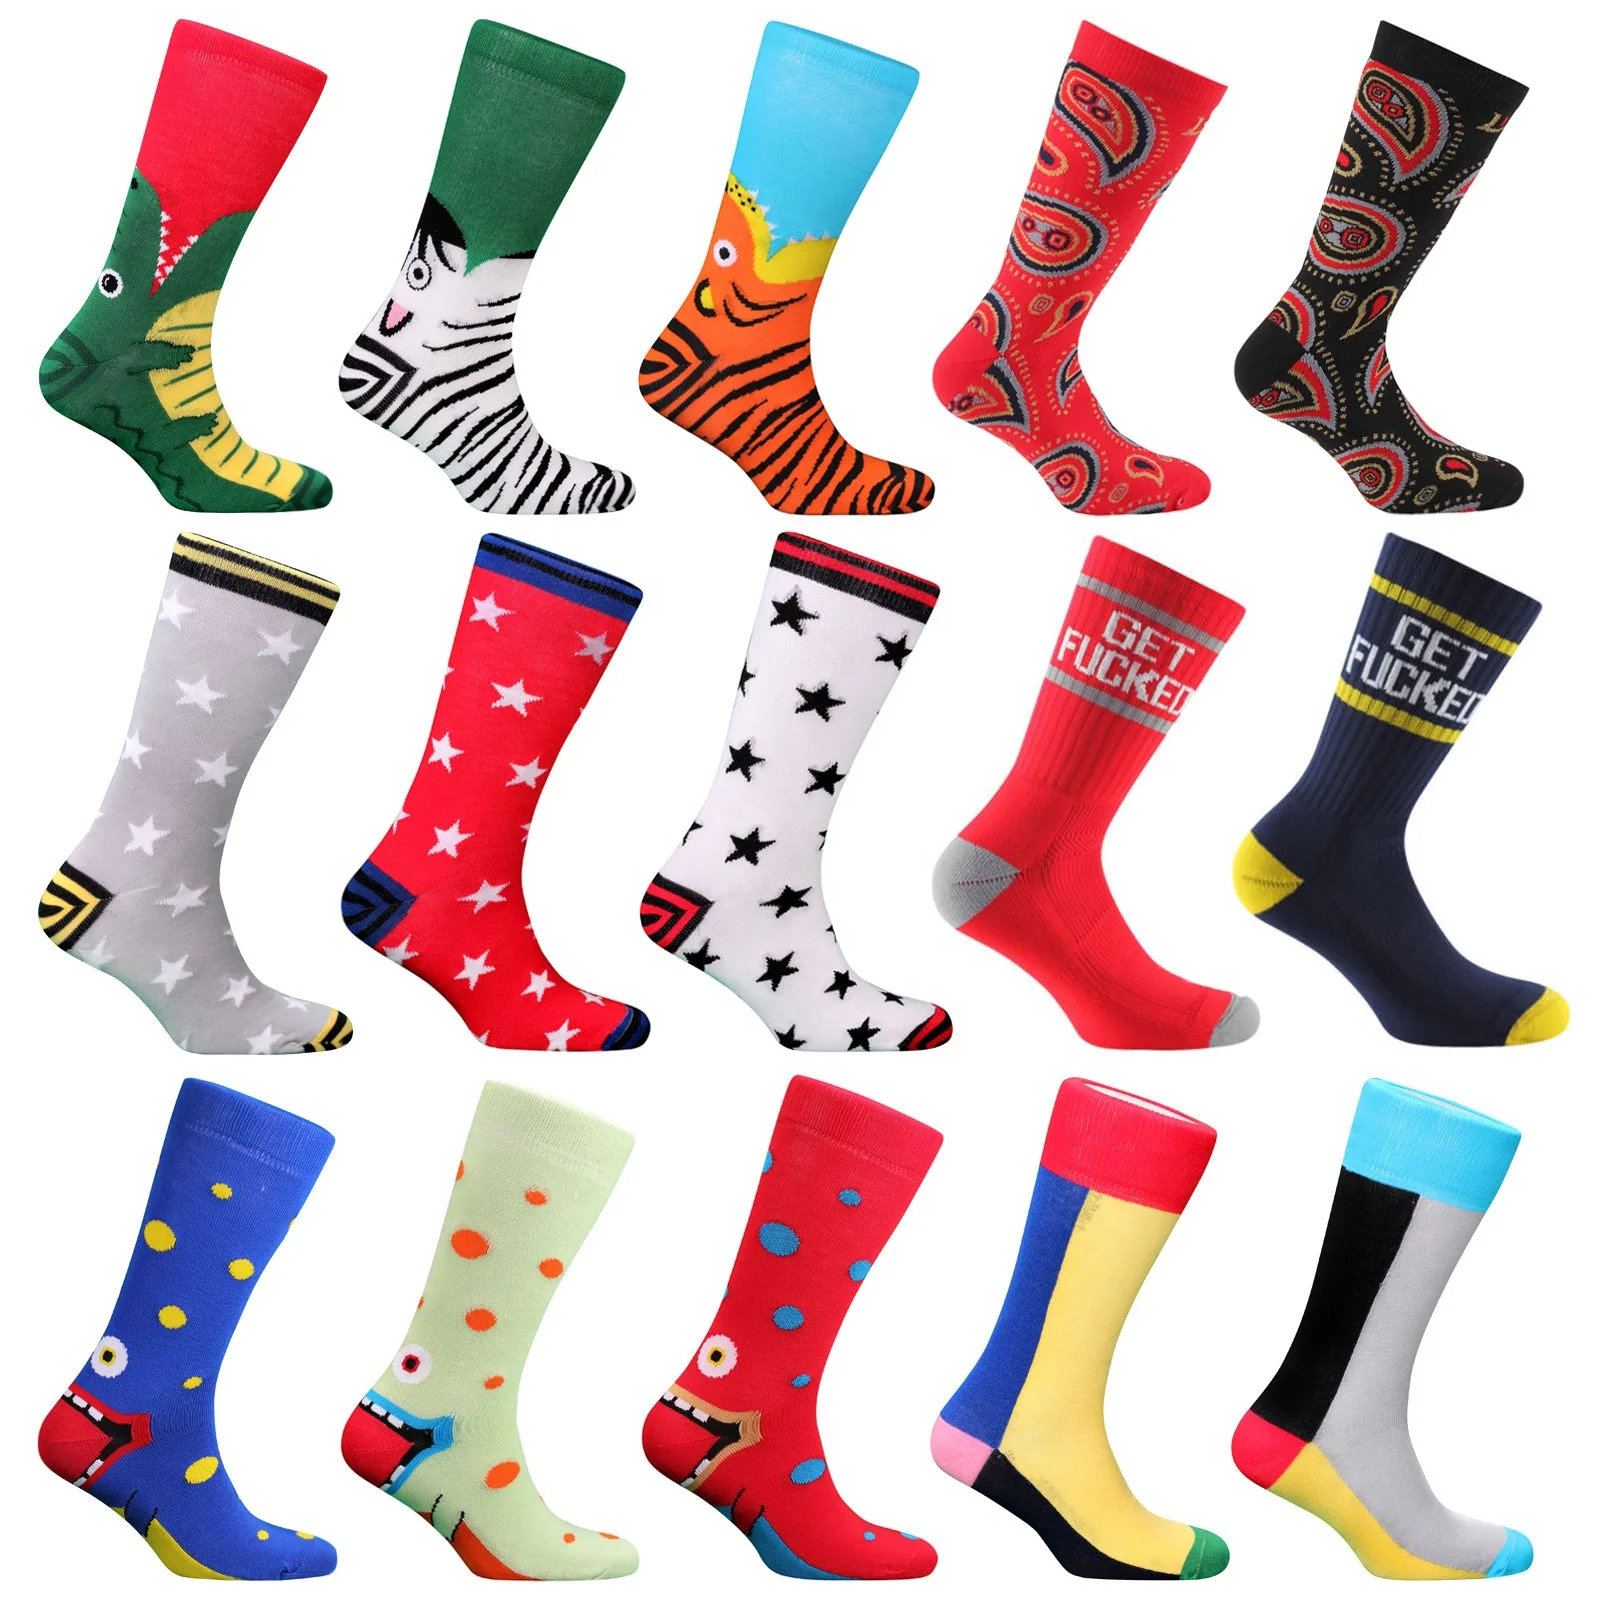 Wholesale Cotton Eyes Fun Funky Noveltysilly Socks - Buy Silly Socks ...